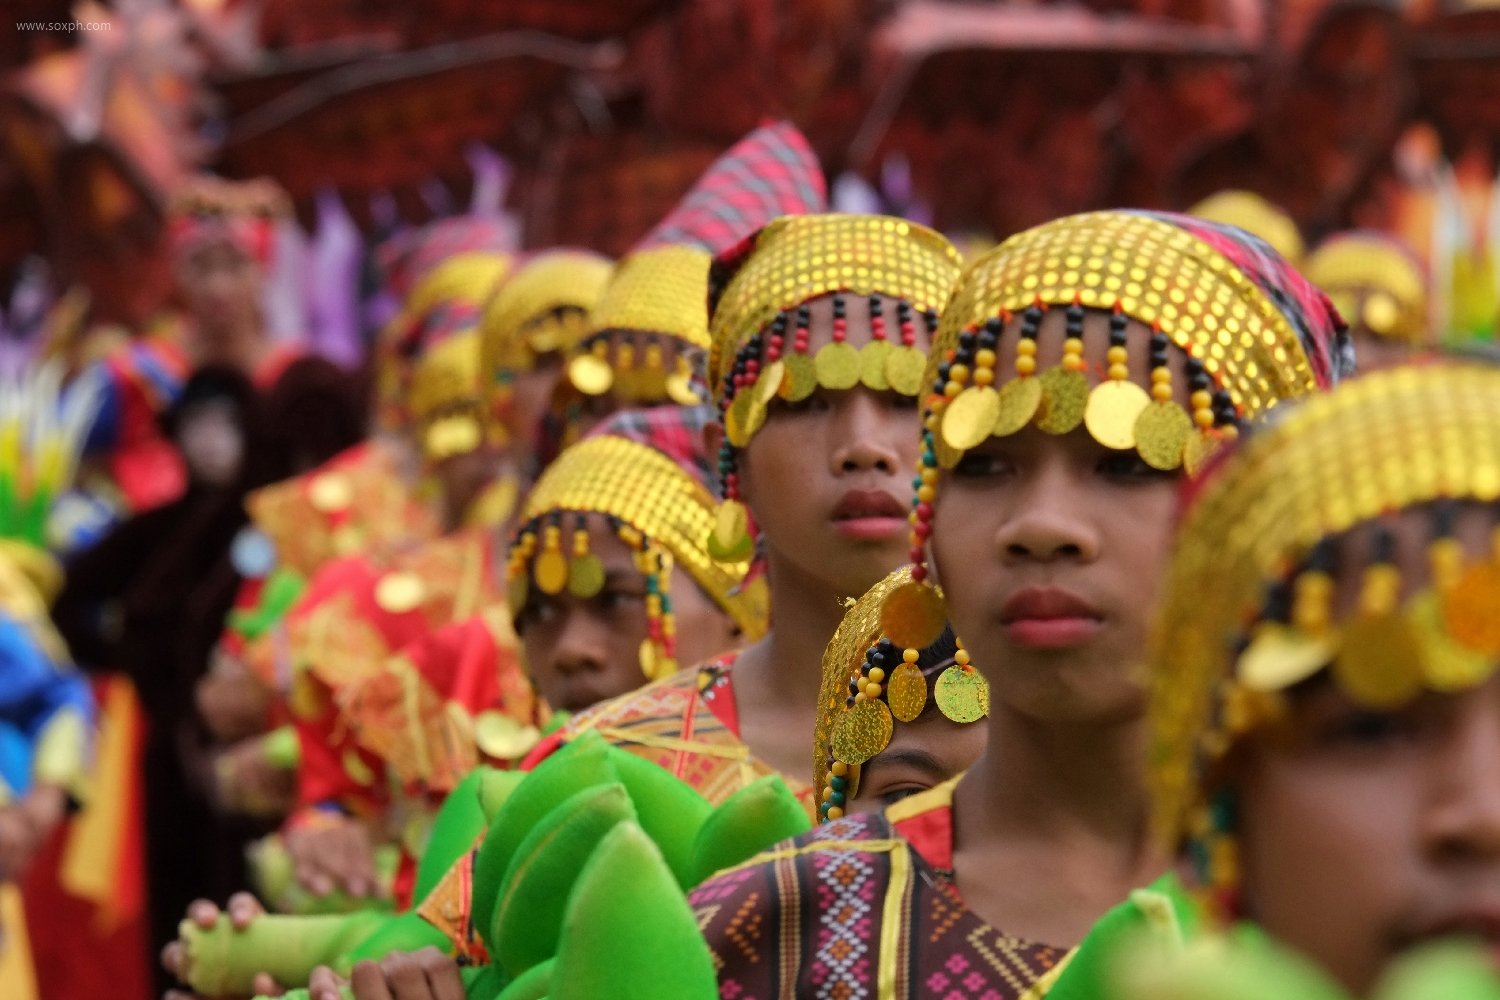 Ingkil-Ingkil sa Salagaan, a colorful showcase of rich culture in Kalamansig